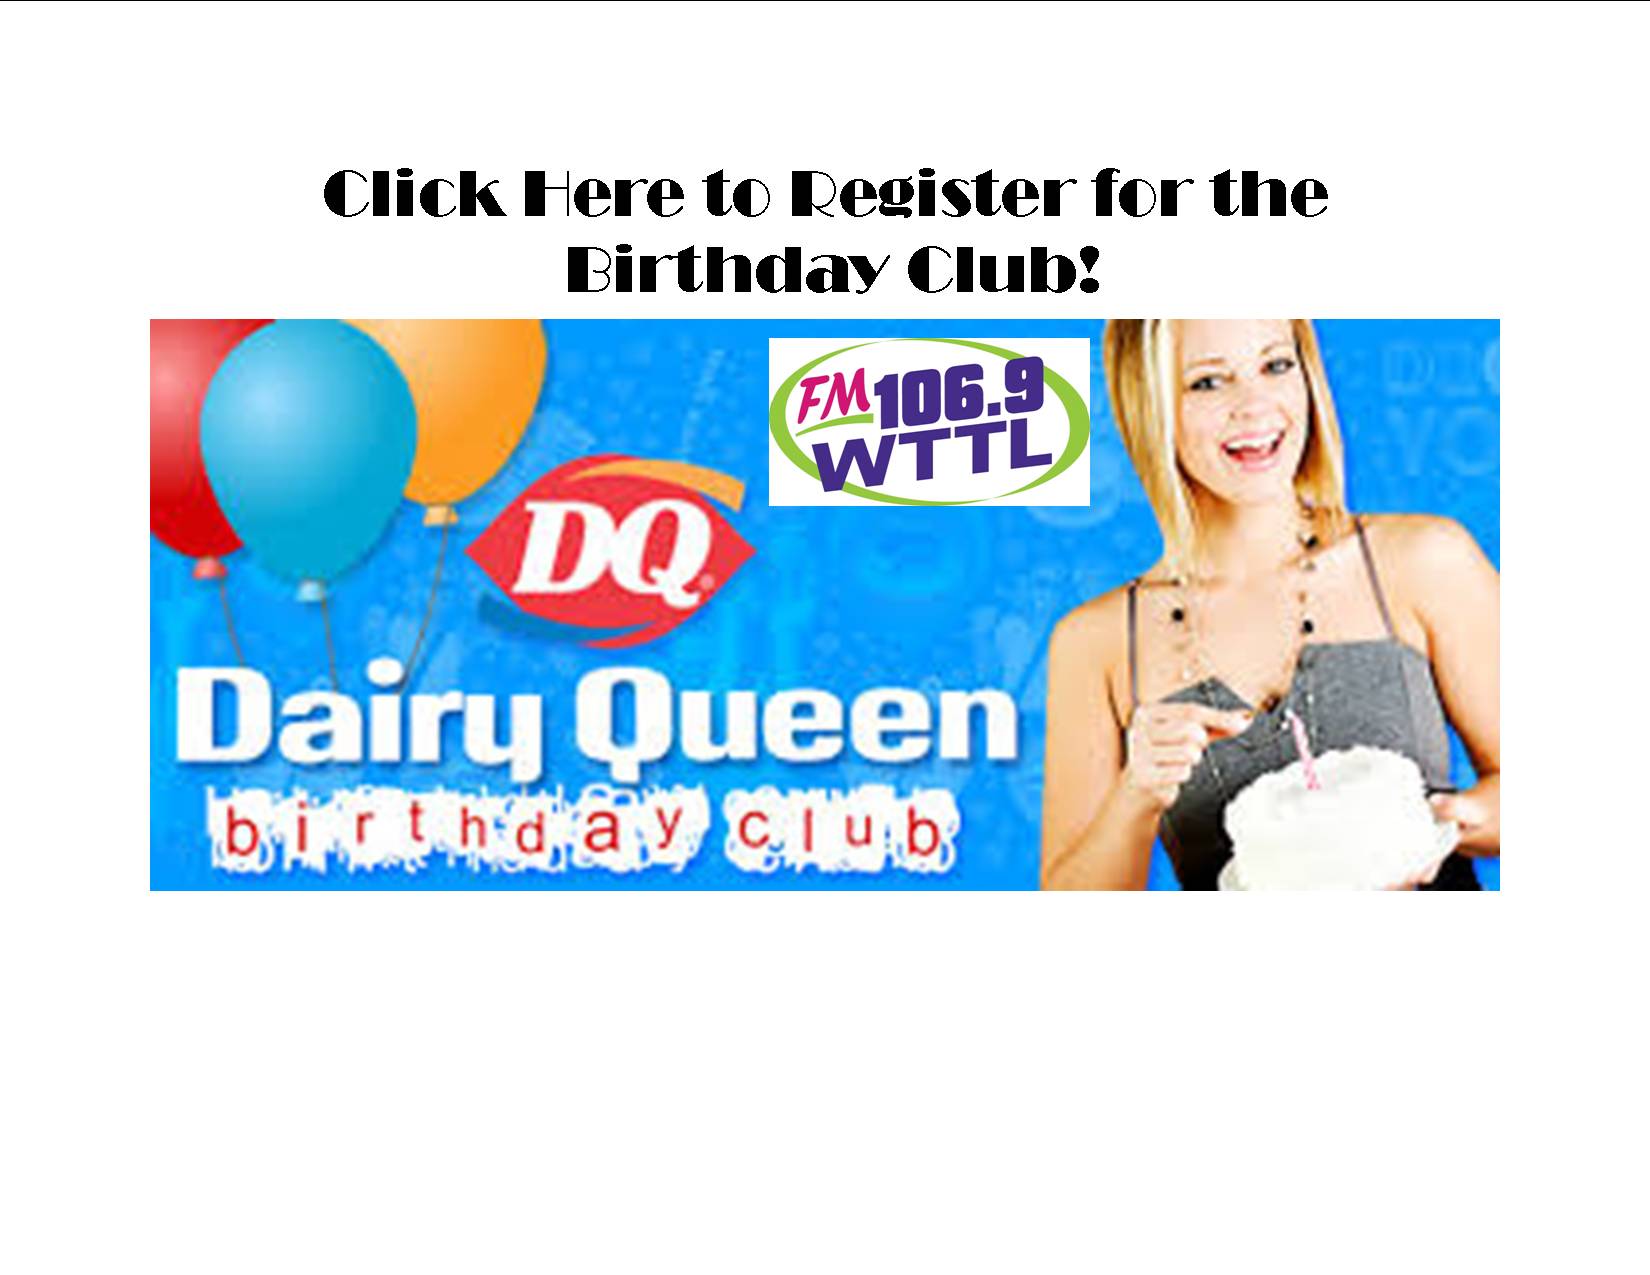 The Birthday Club